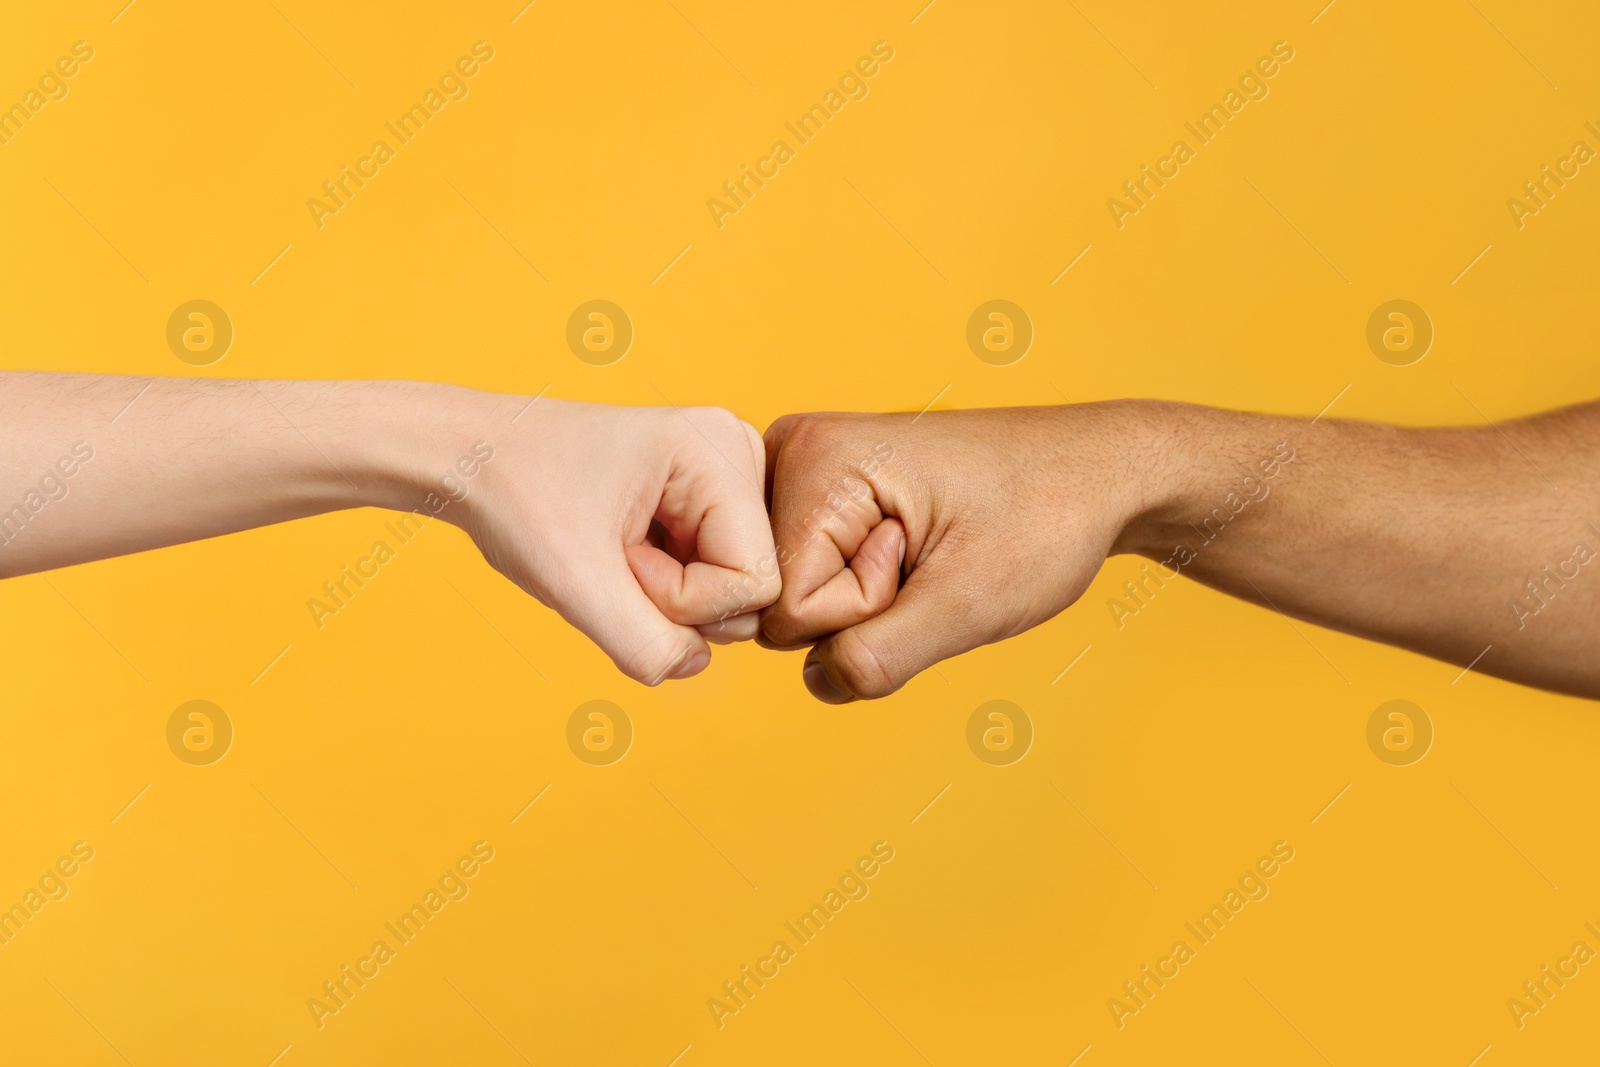 Photo of International relationships. People making fist bump on orange background, closeup